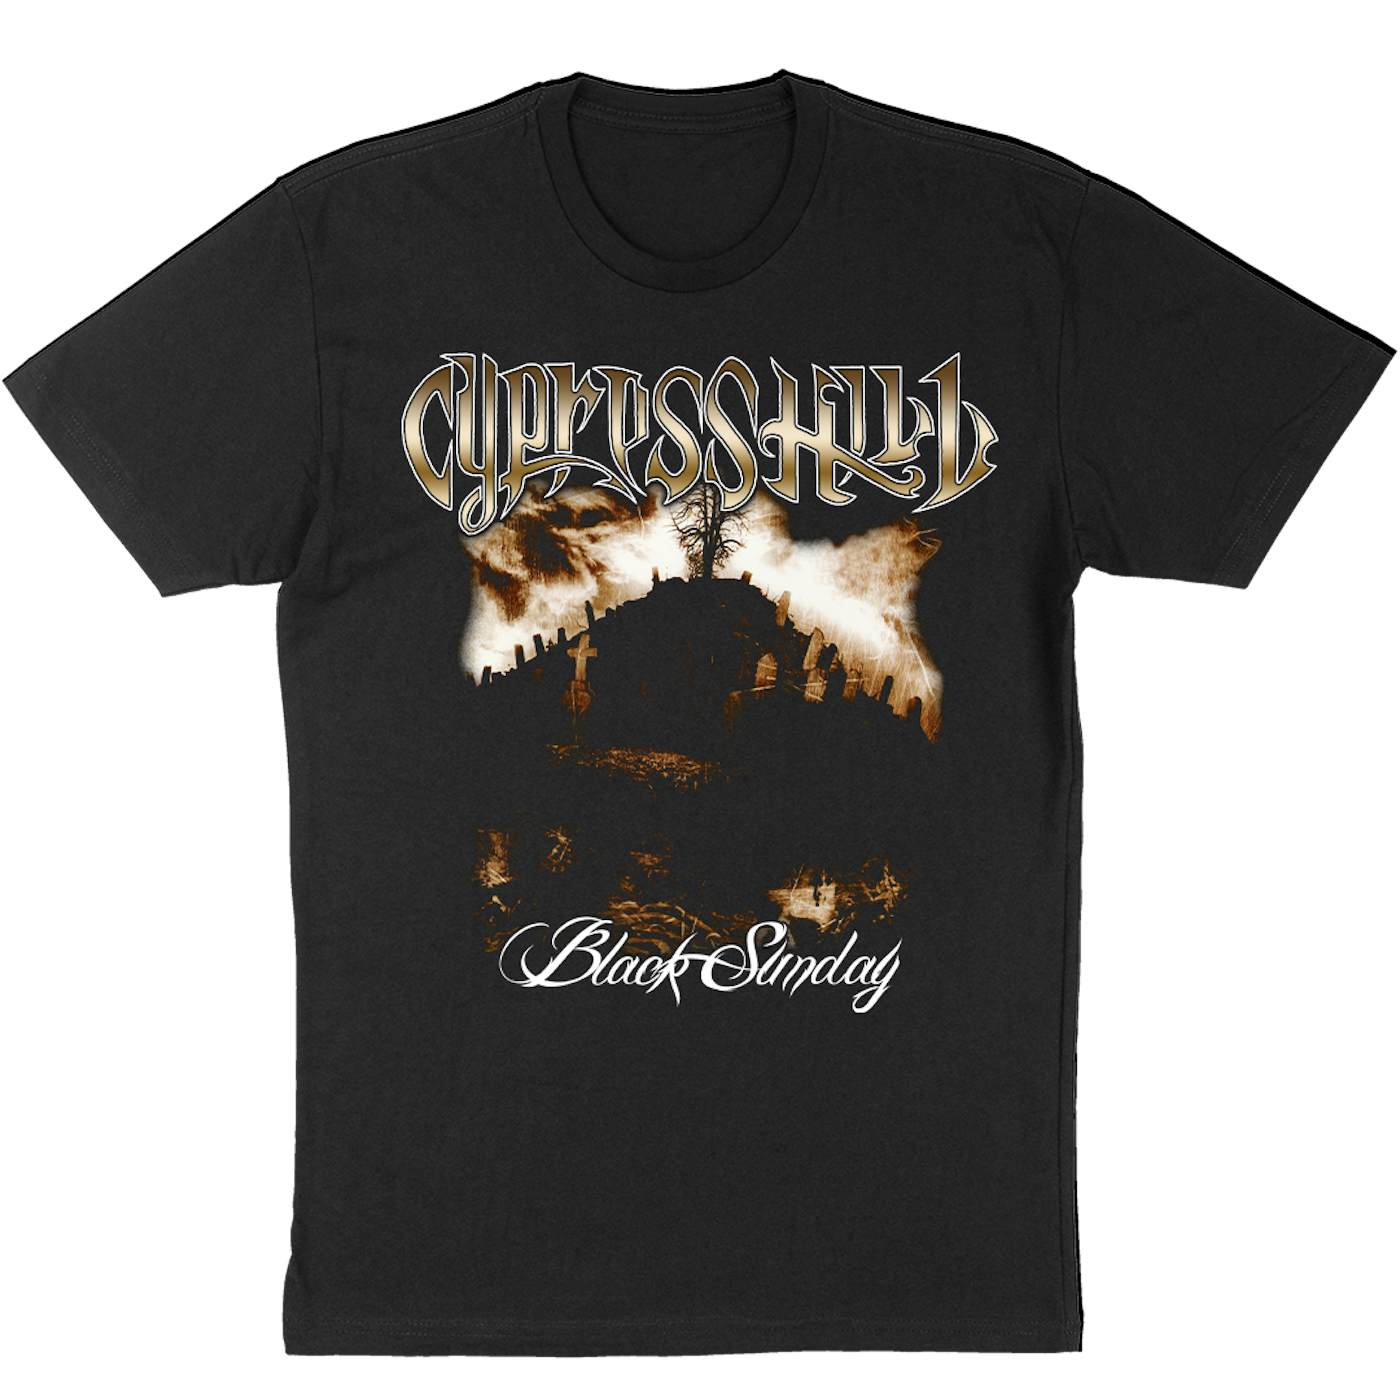 Cypress Hill "Black Sunday" T-Shirt